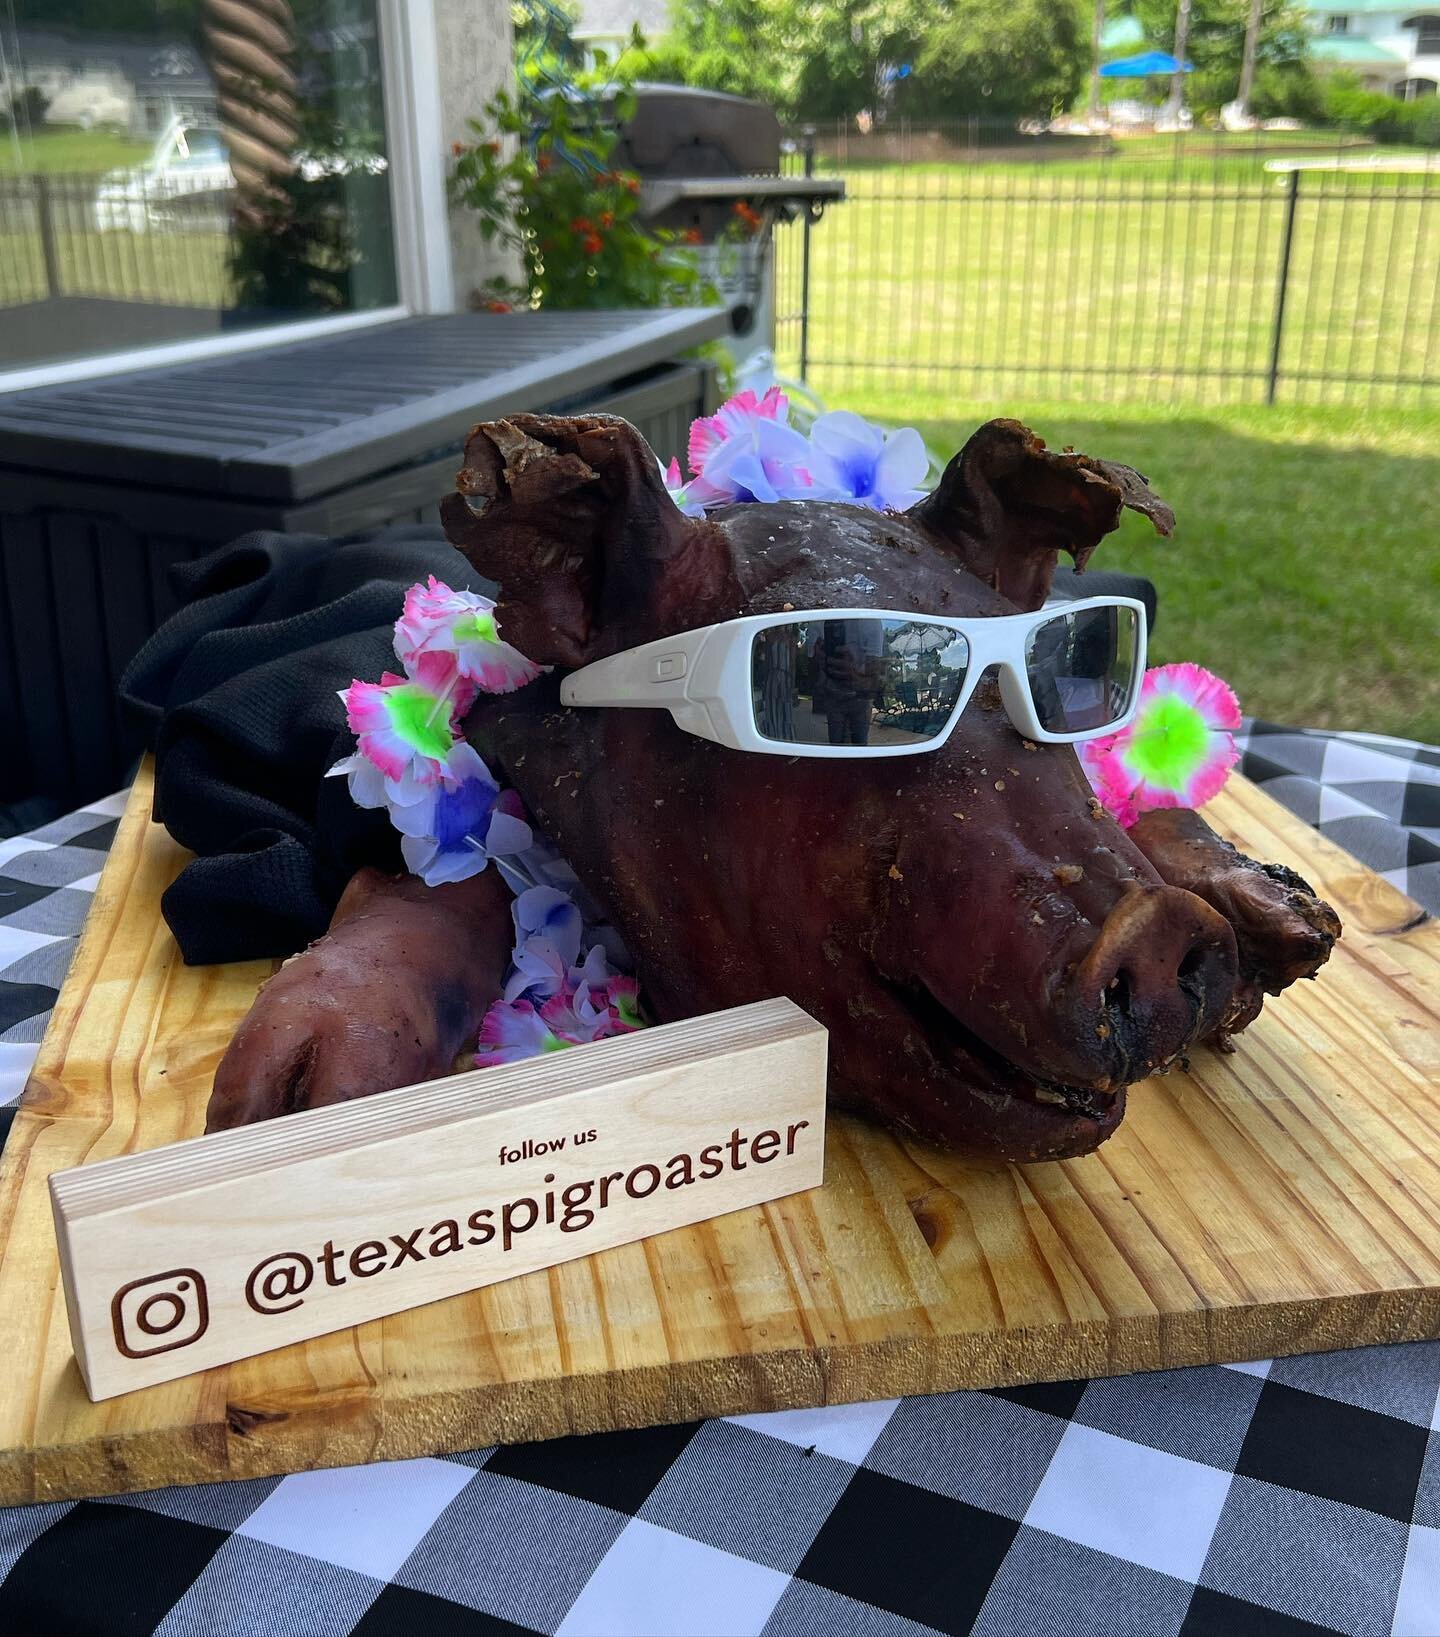 Lake Party Pig Roast! 

#texaspigroaster 
#thewoodlandstx 
#catering 
#houstonfood